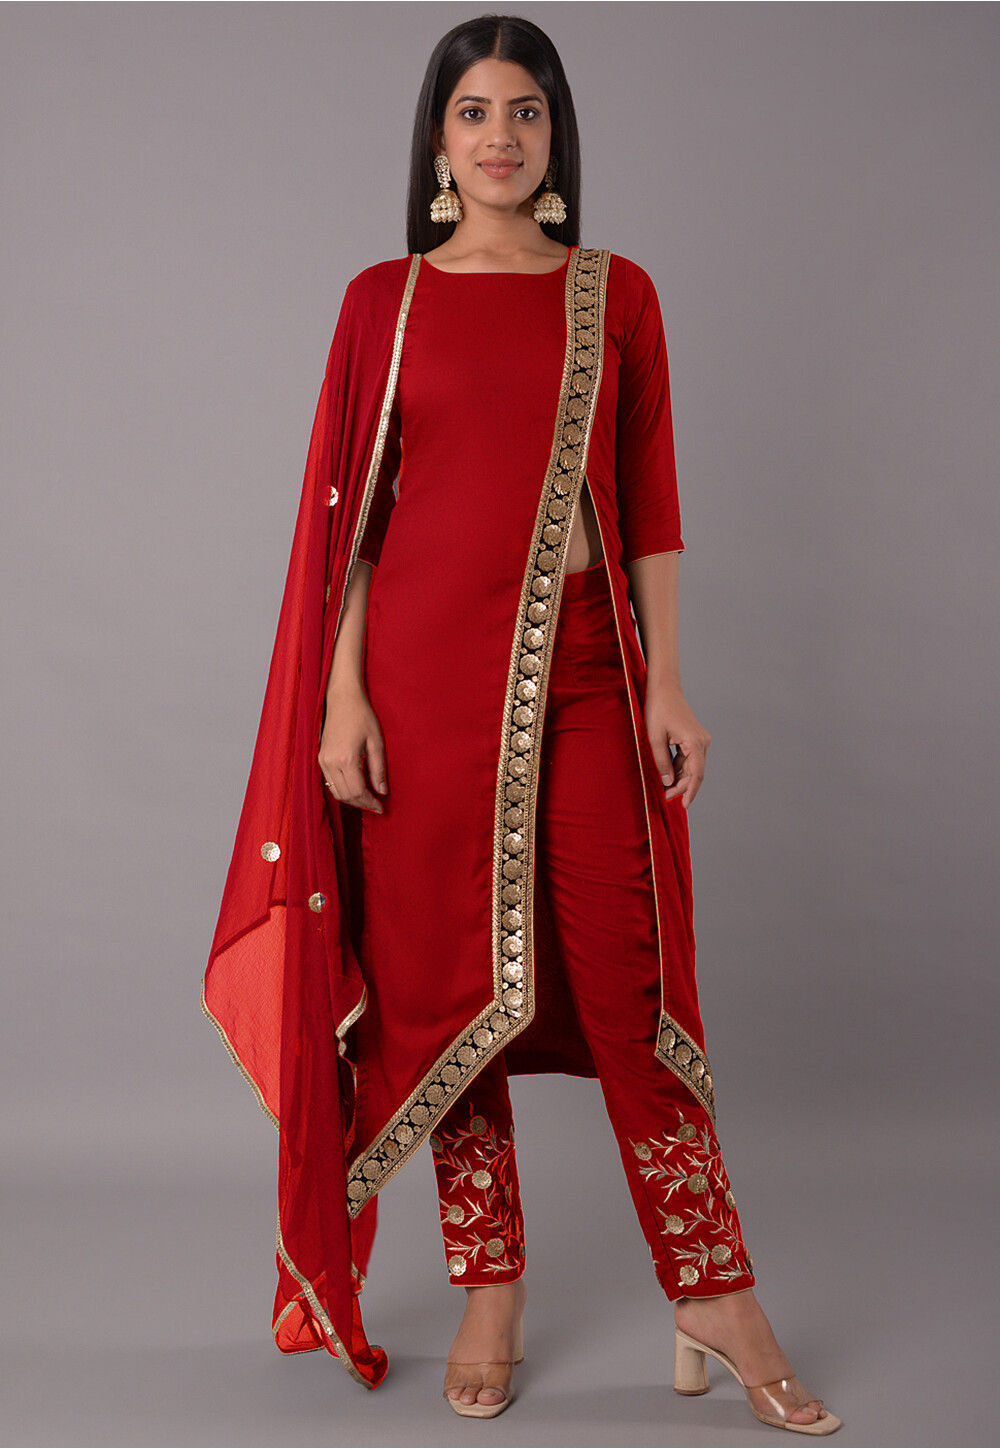 Buy Embroidered Rayon Pakistani Suit in Red Online : KUR81 - Utsav Fashion